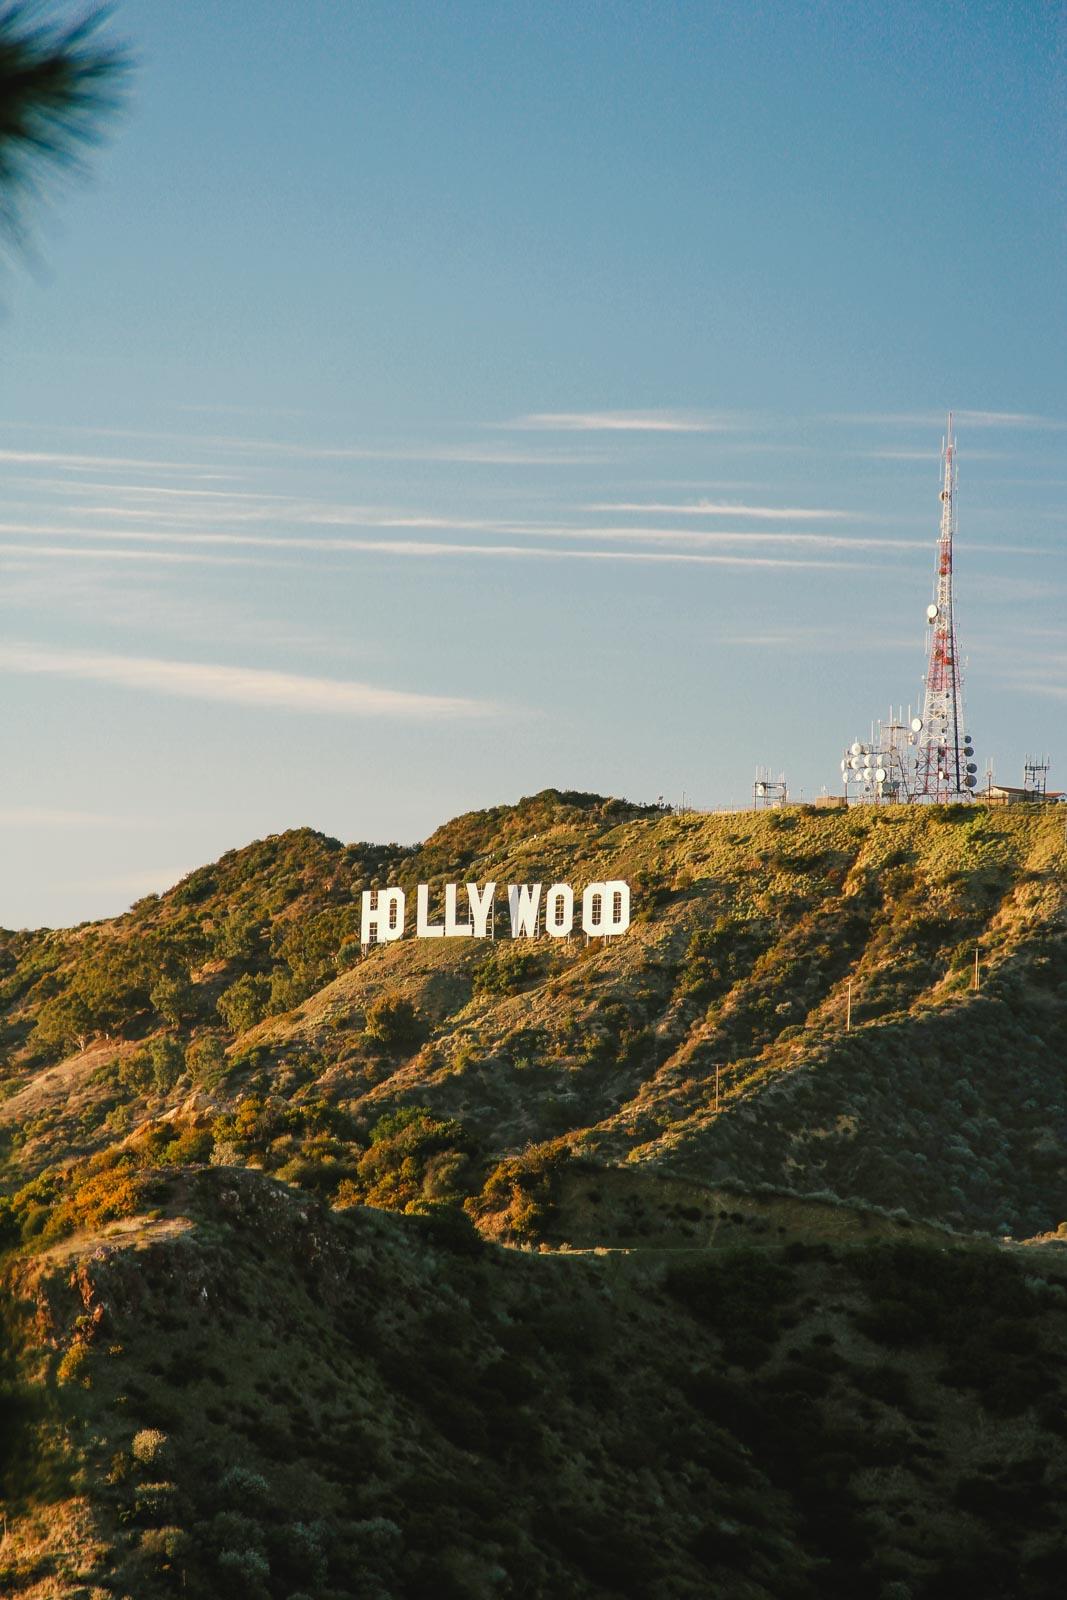 Hollywood sign © Gabe, unsplash